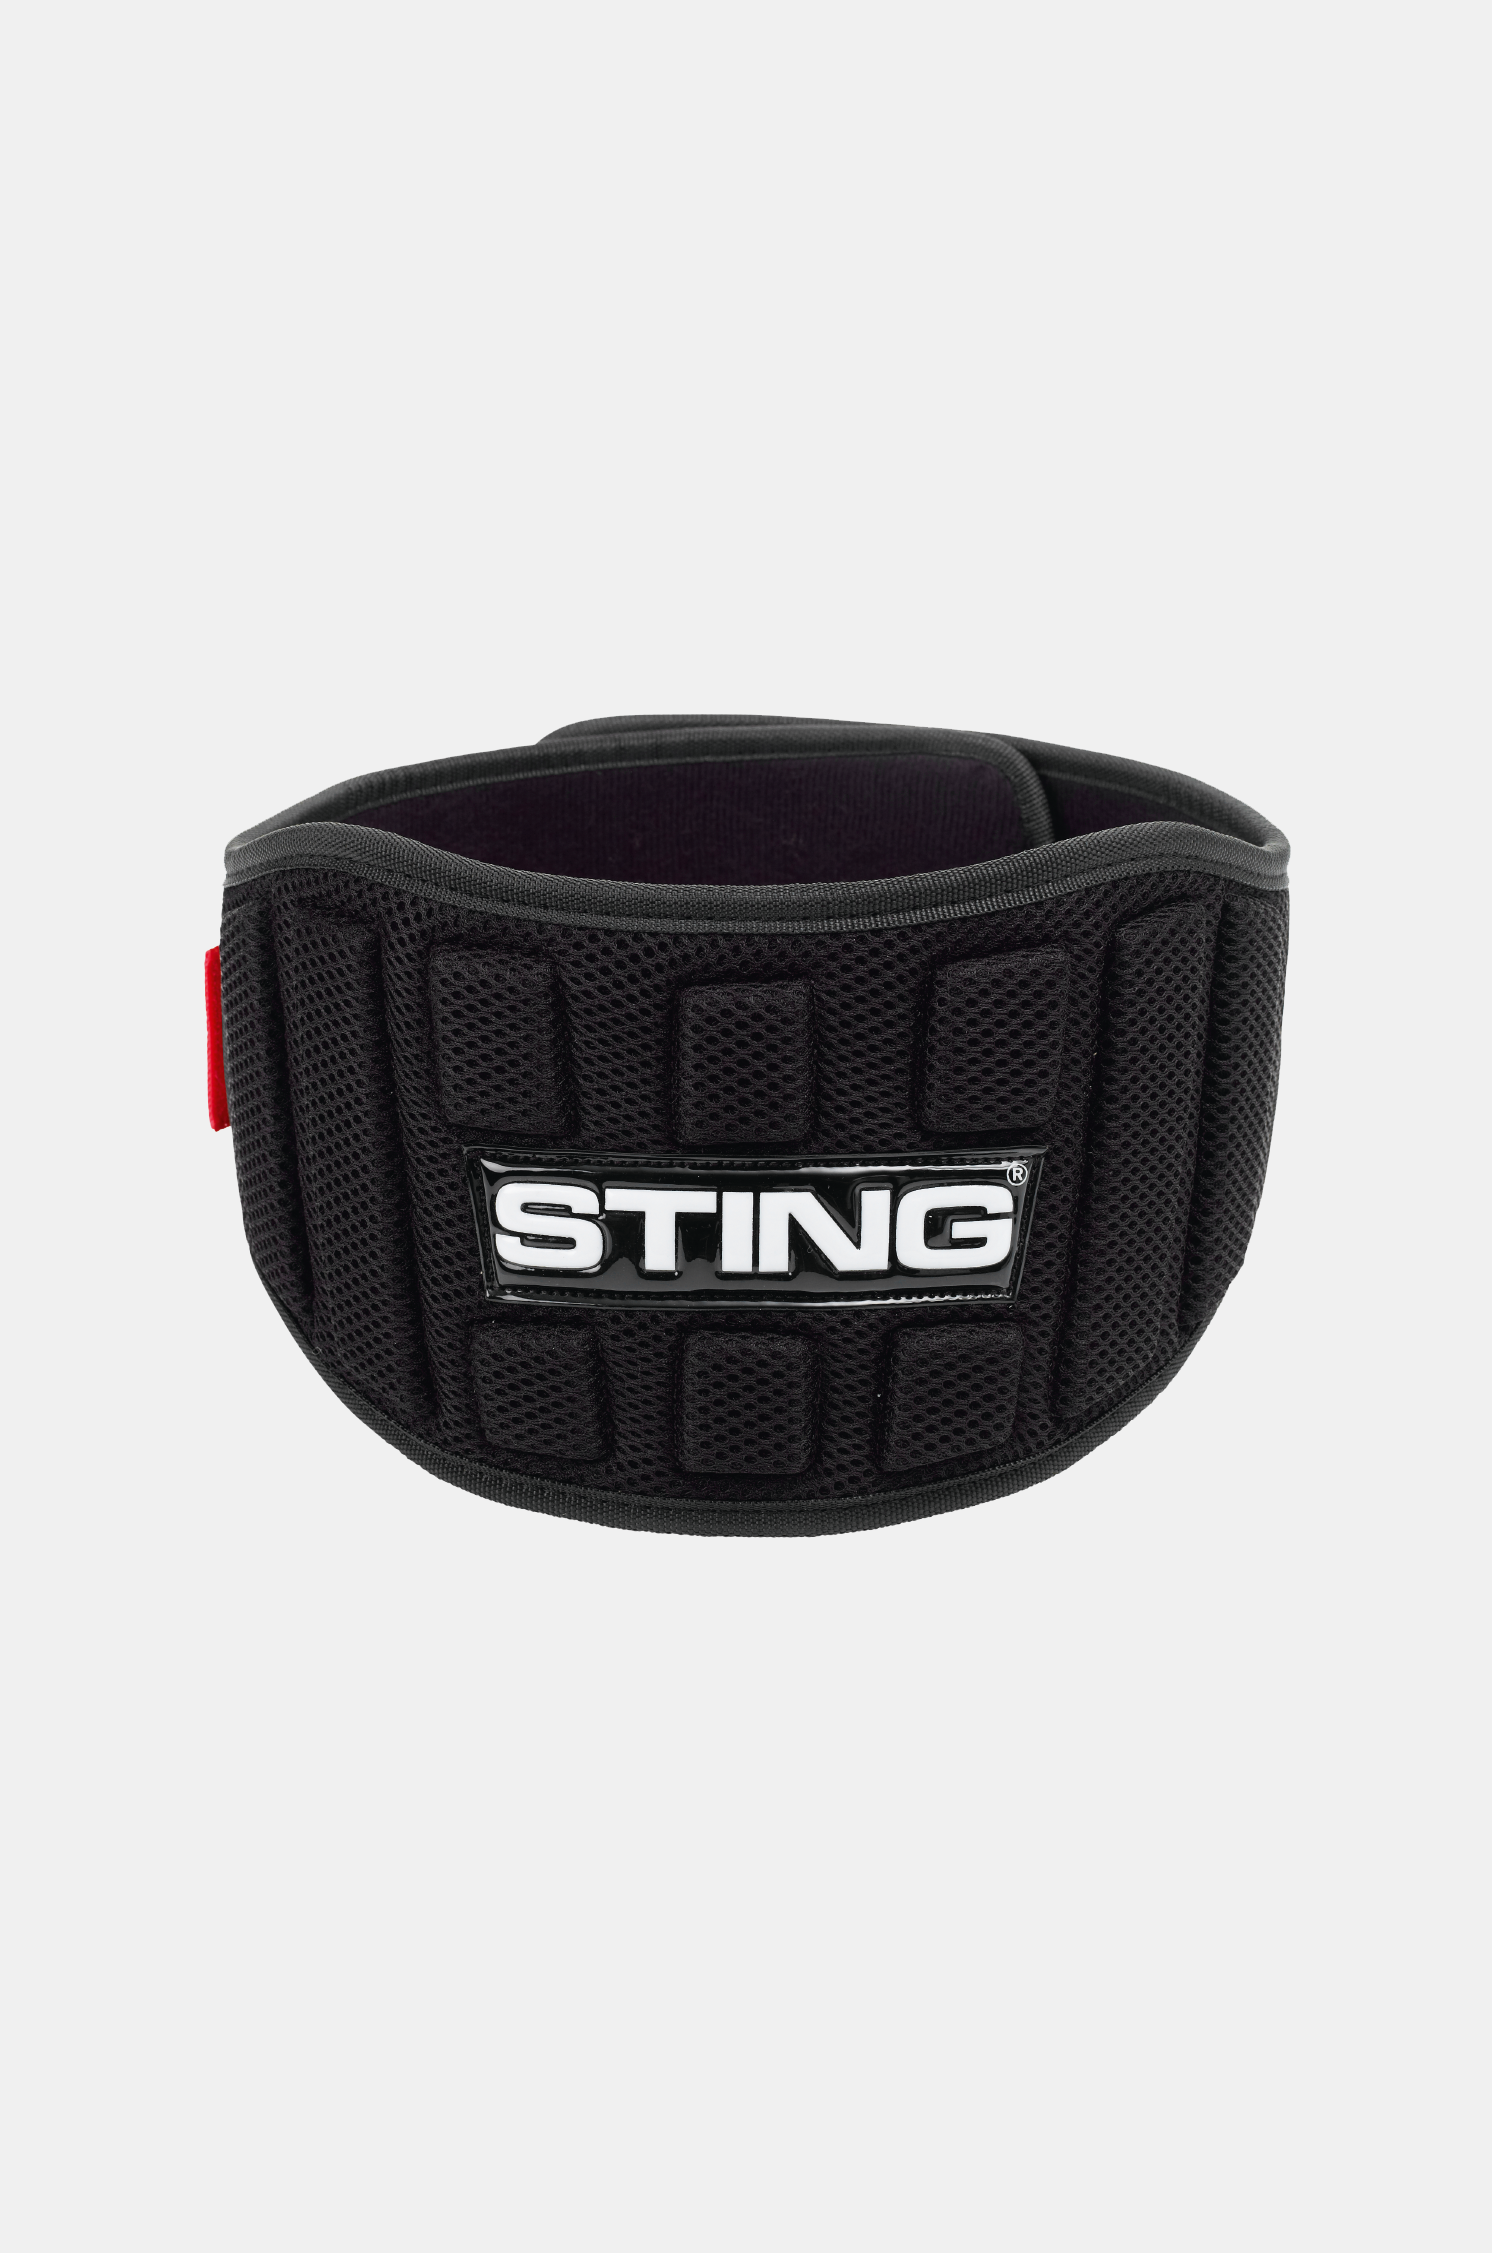 STING Neo Lifting Belt 6 Inch